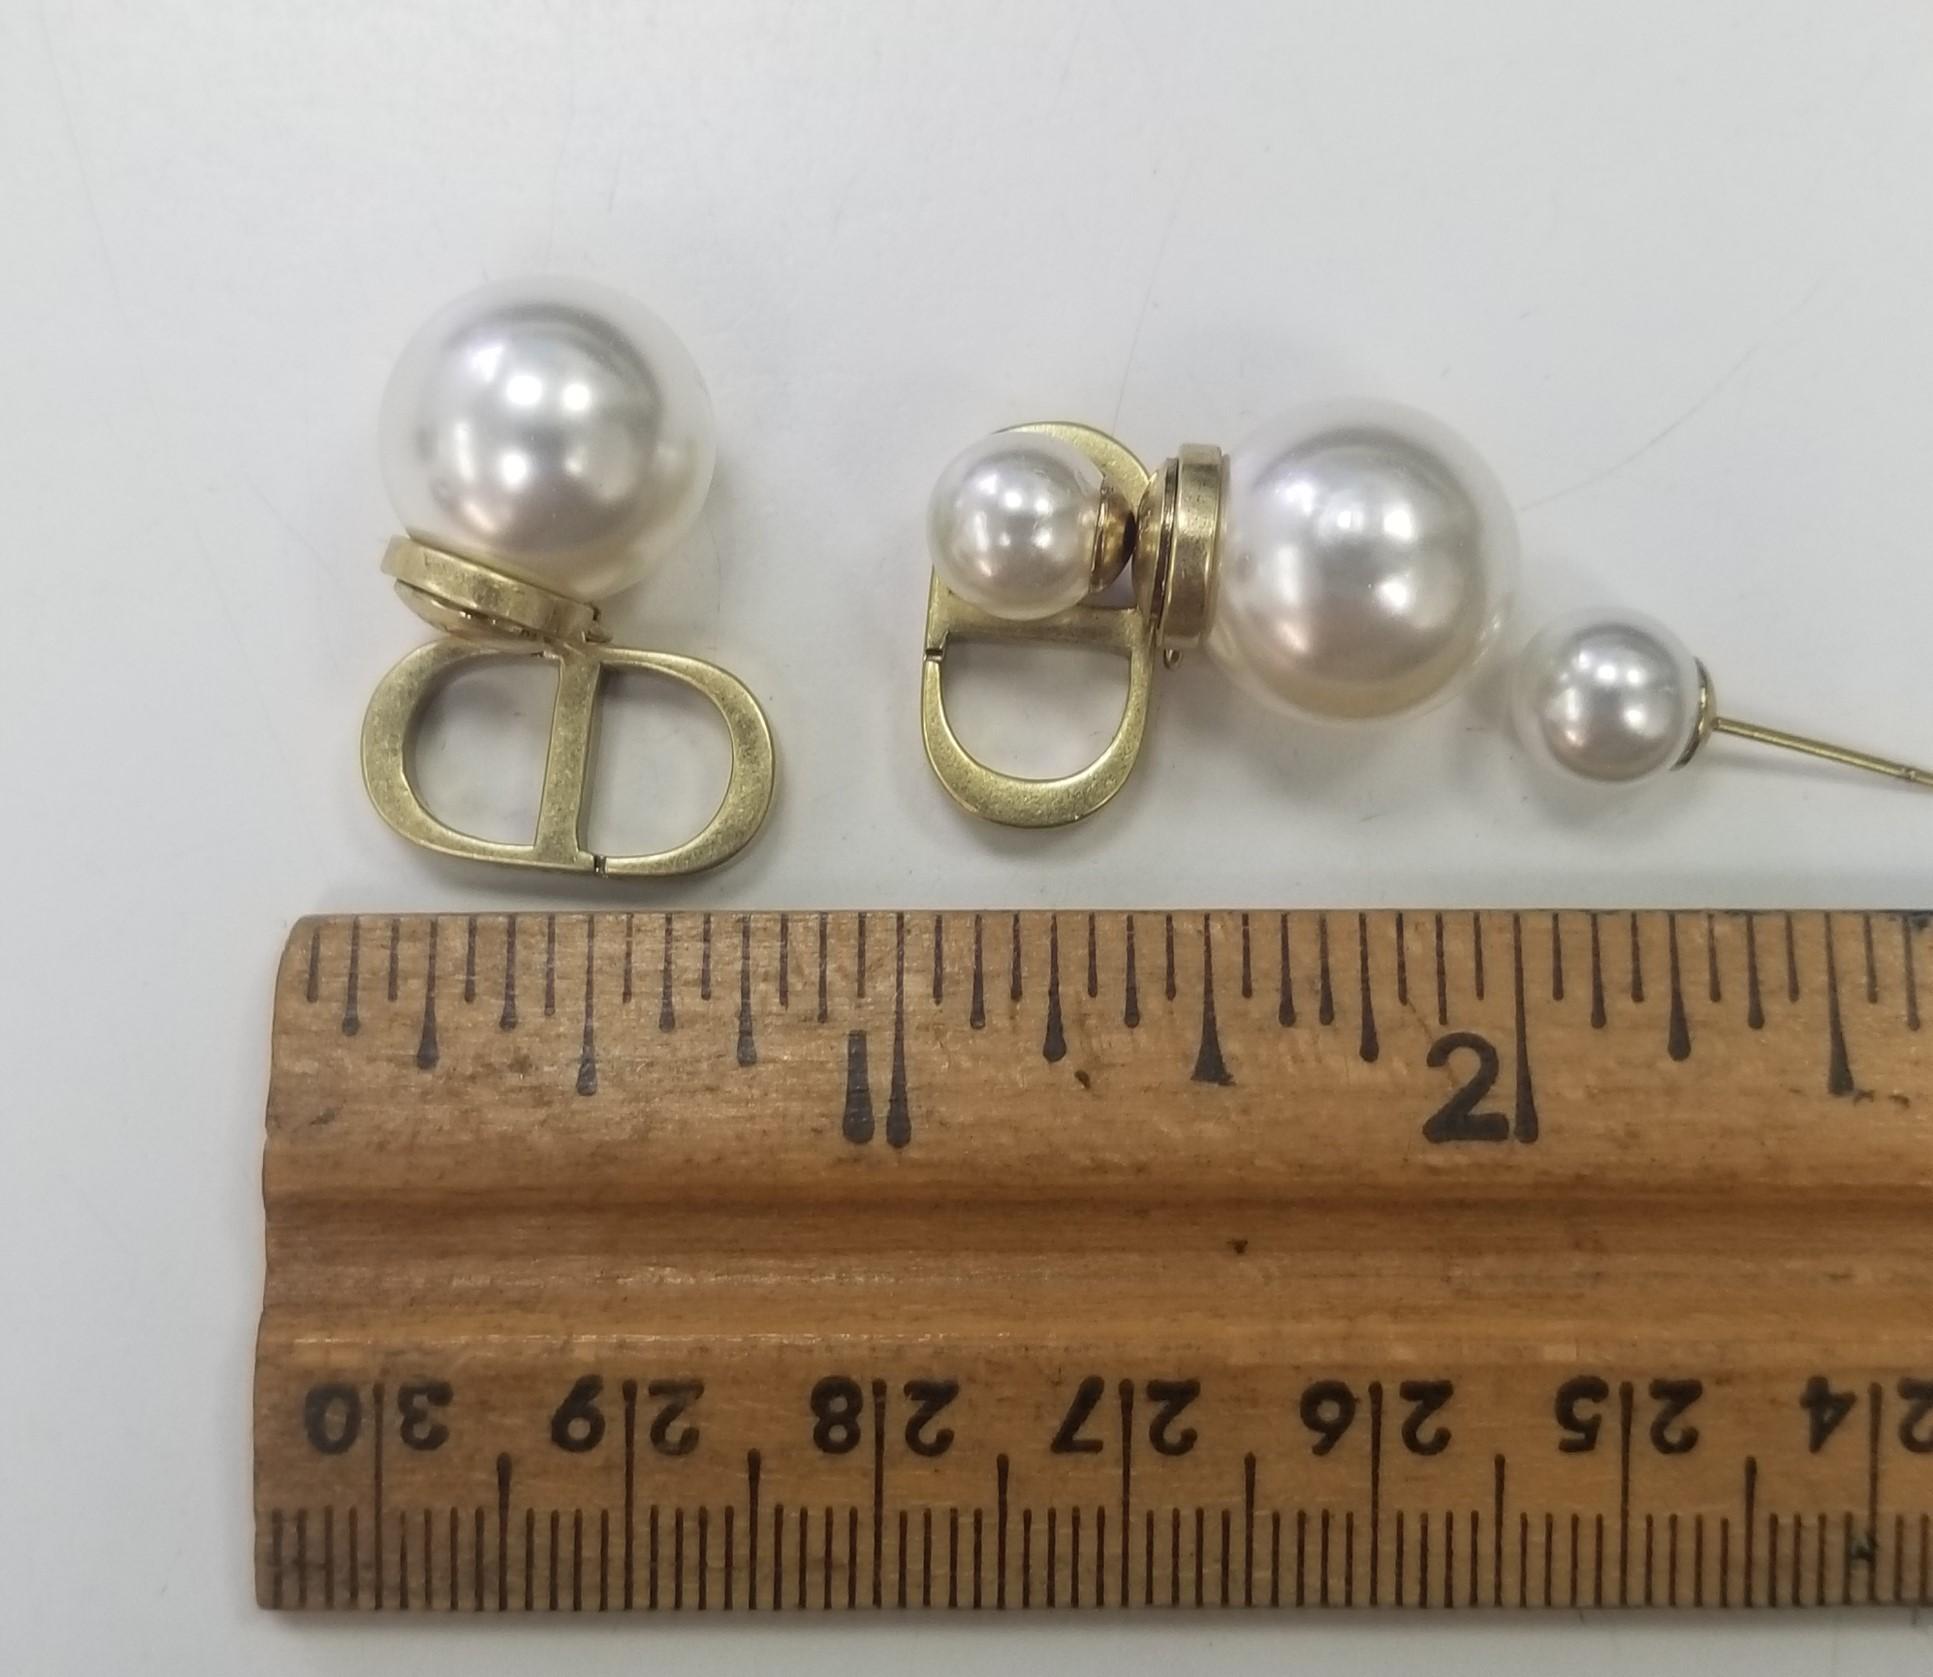 dior clover earrings